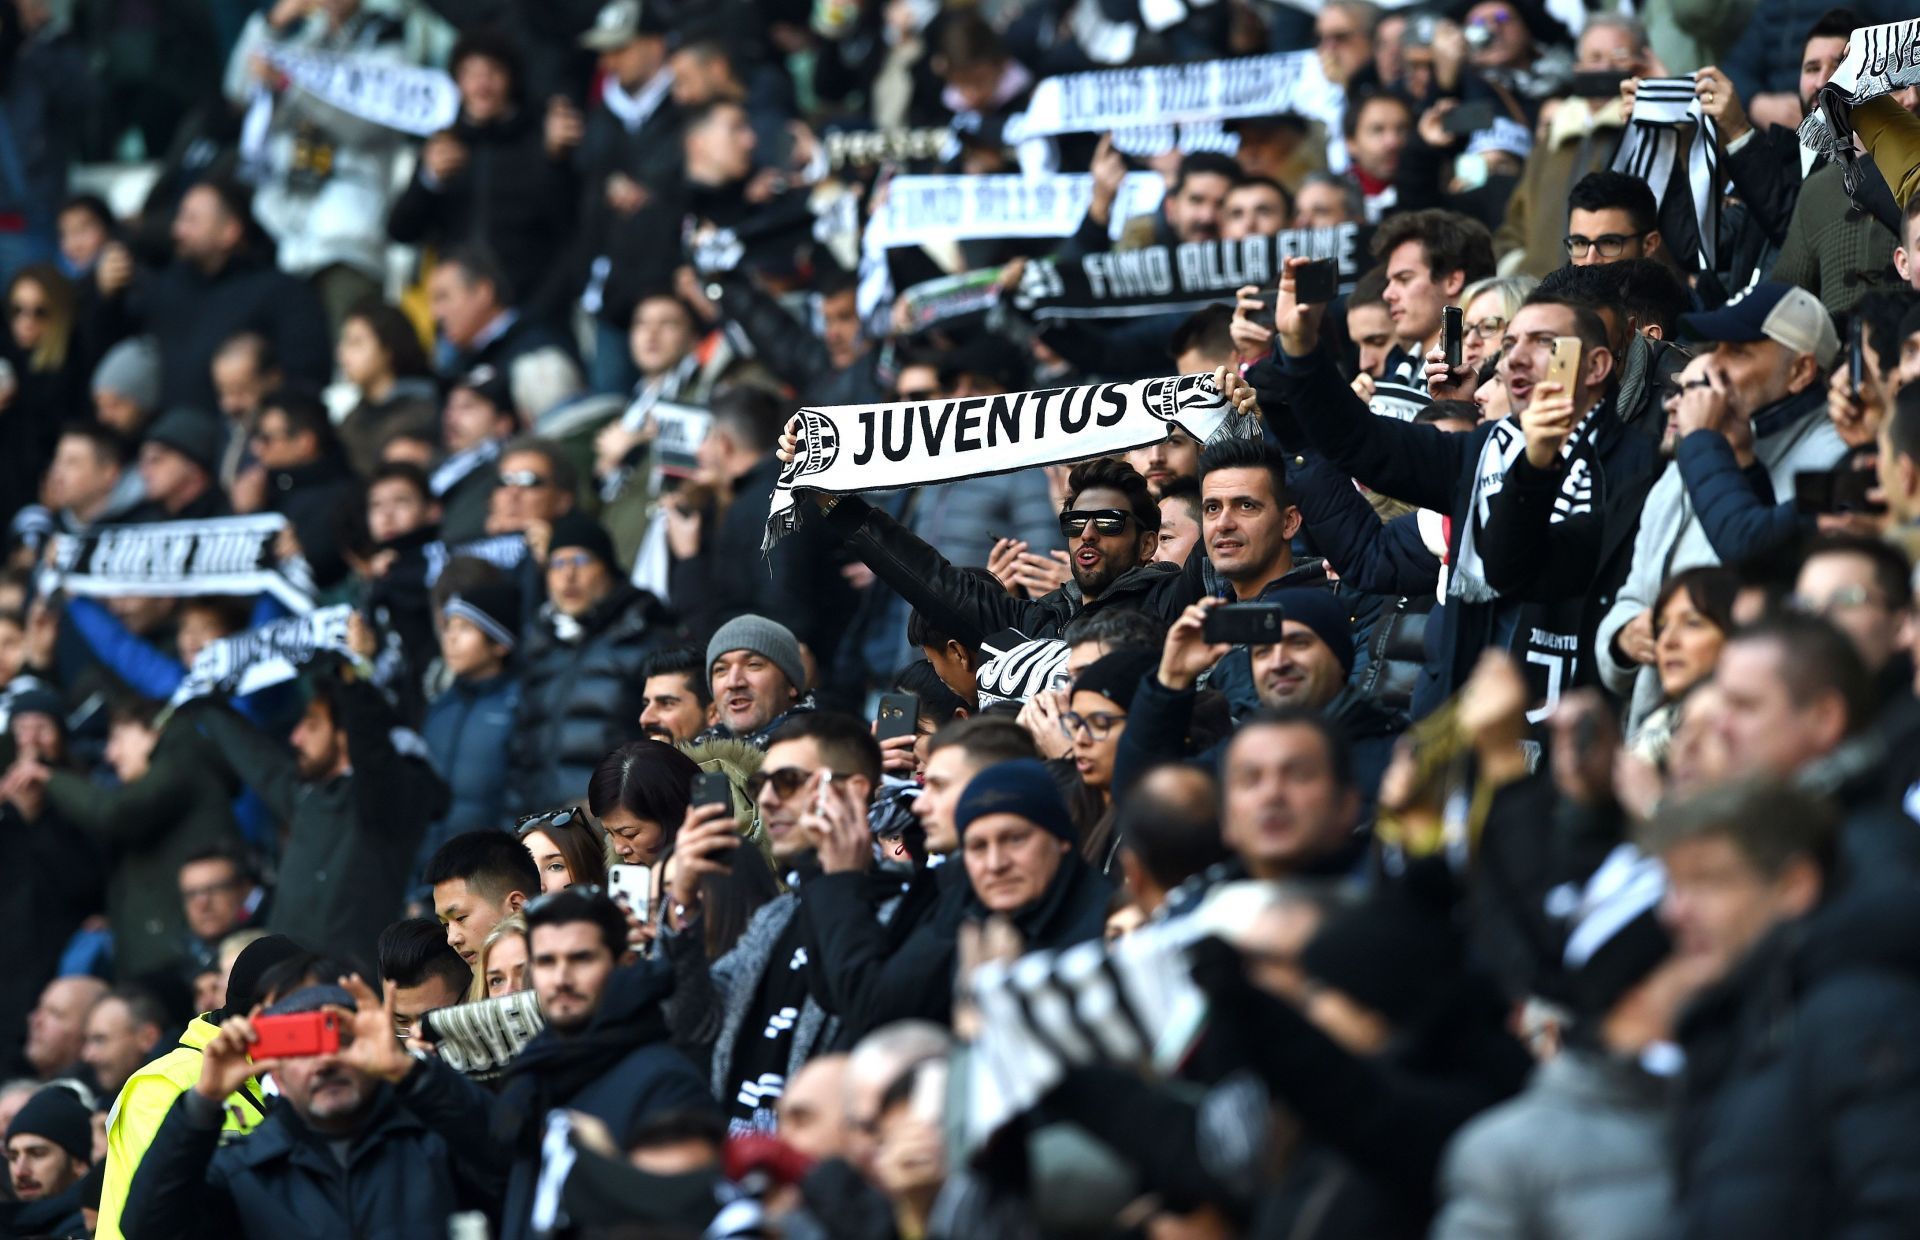 Juventus most successful team in Italy